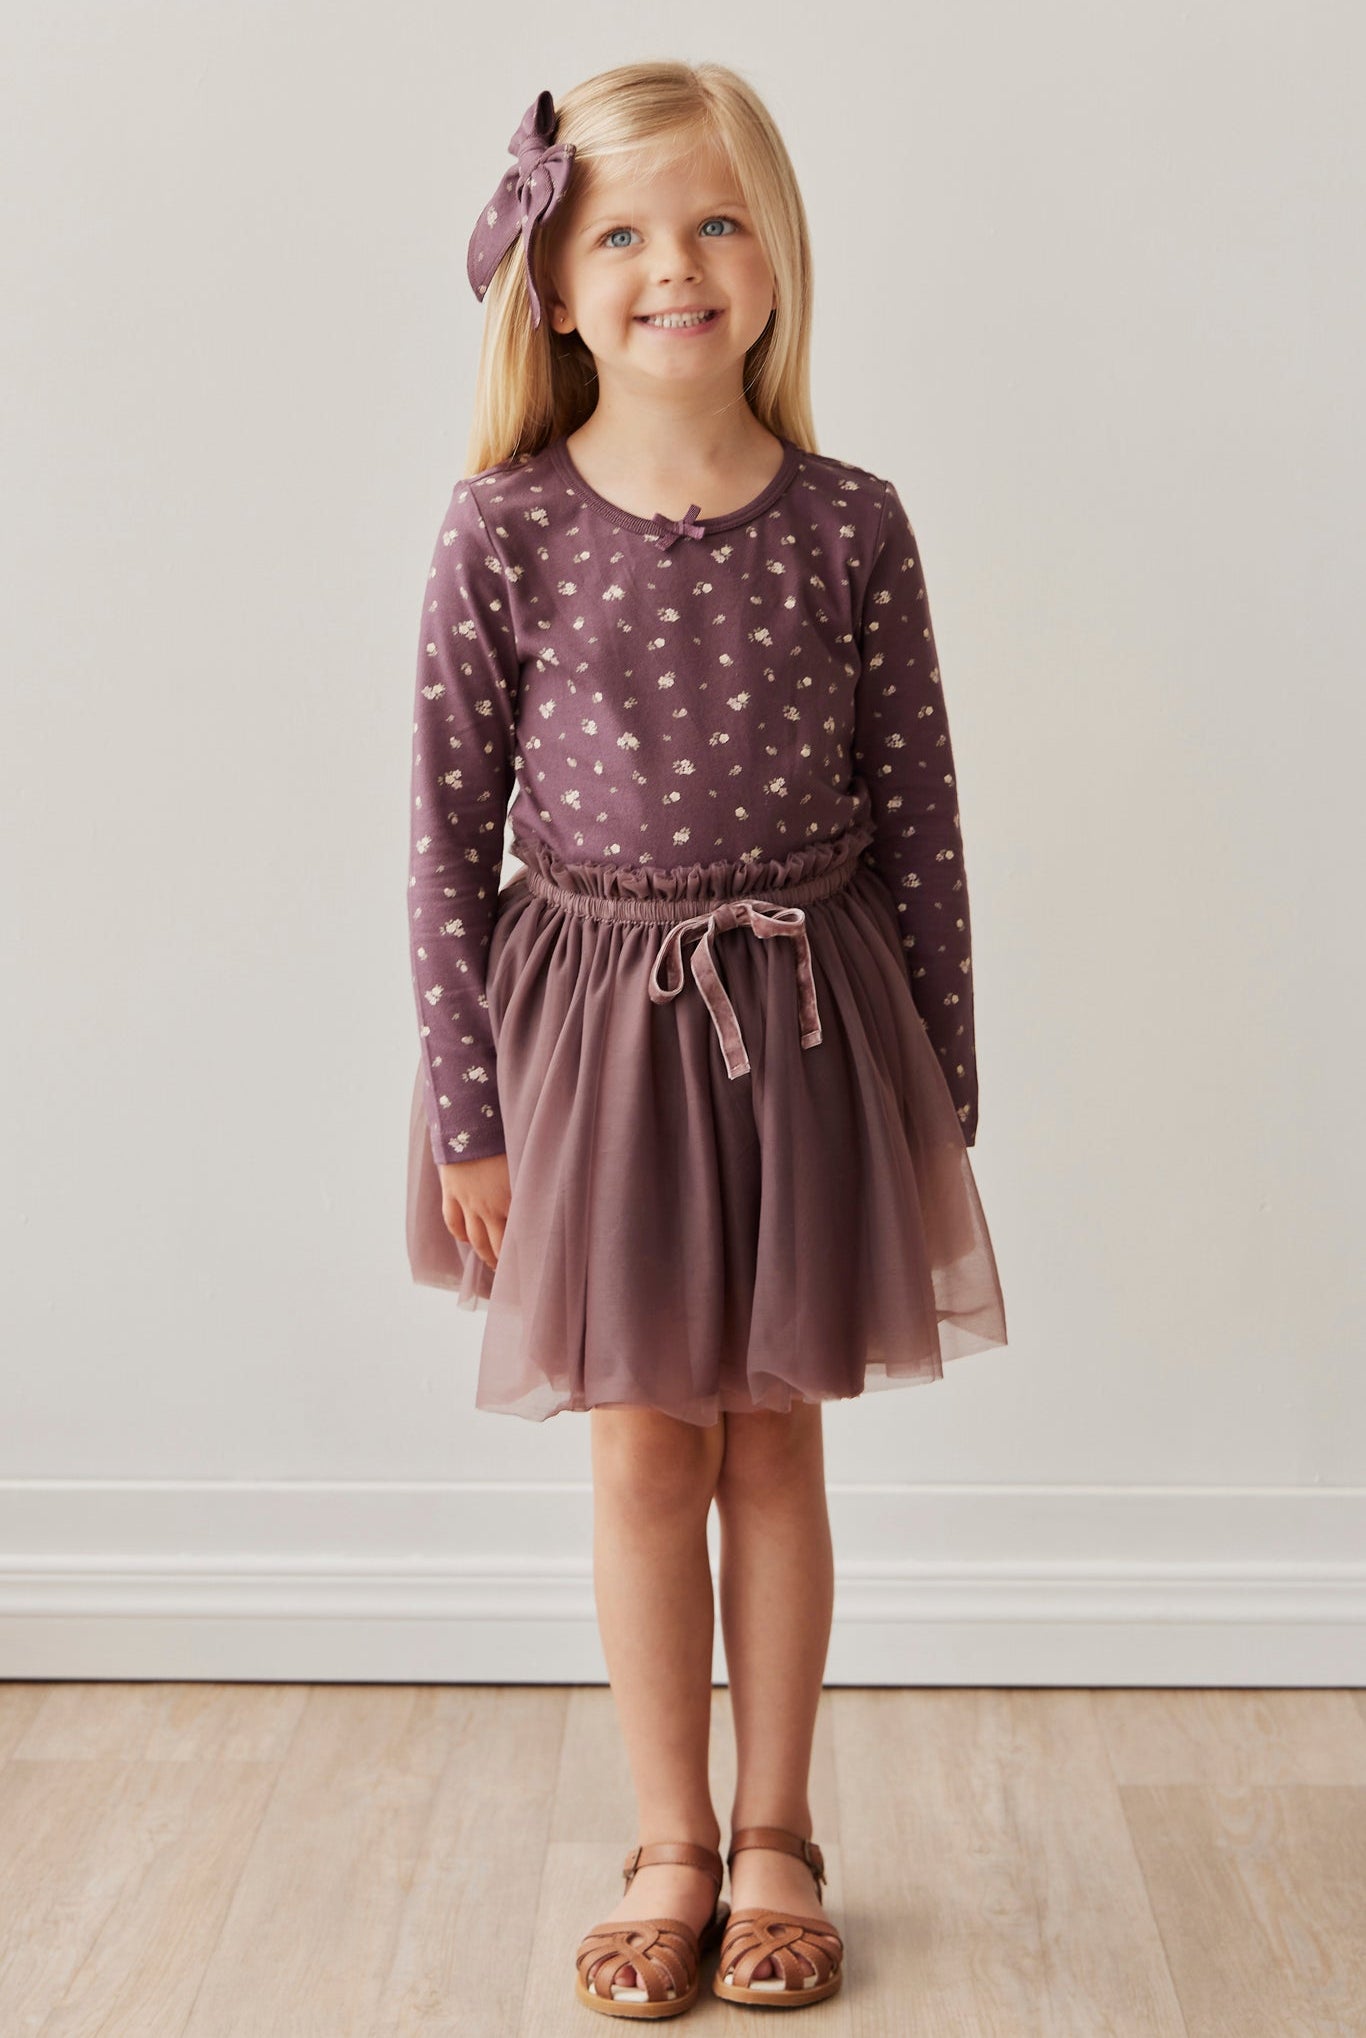 5 Year old girl soft tutu skirt